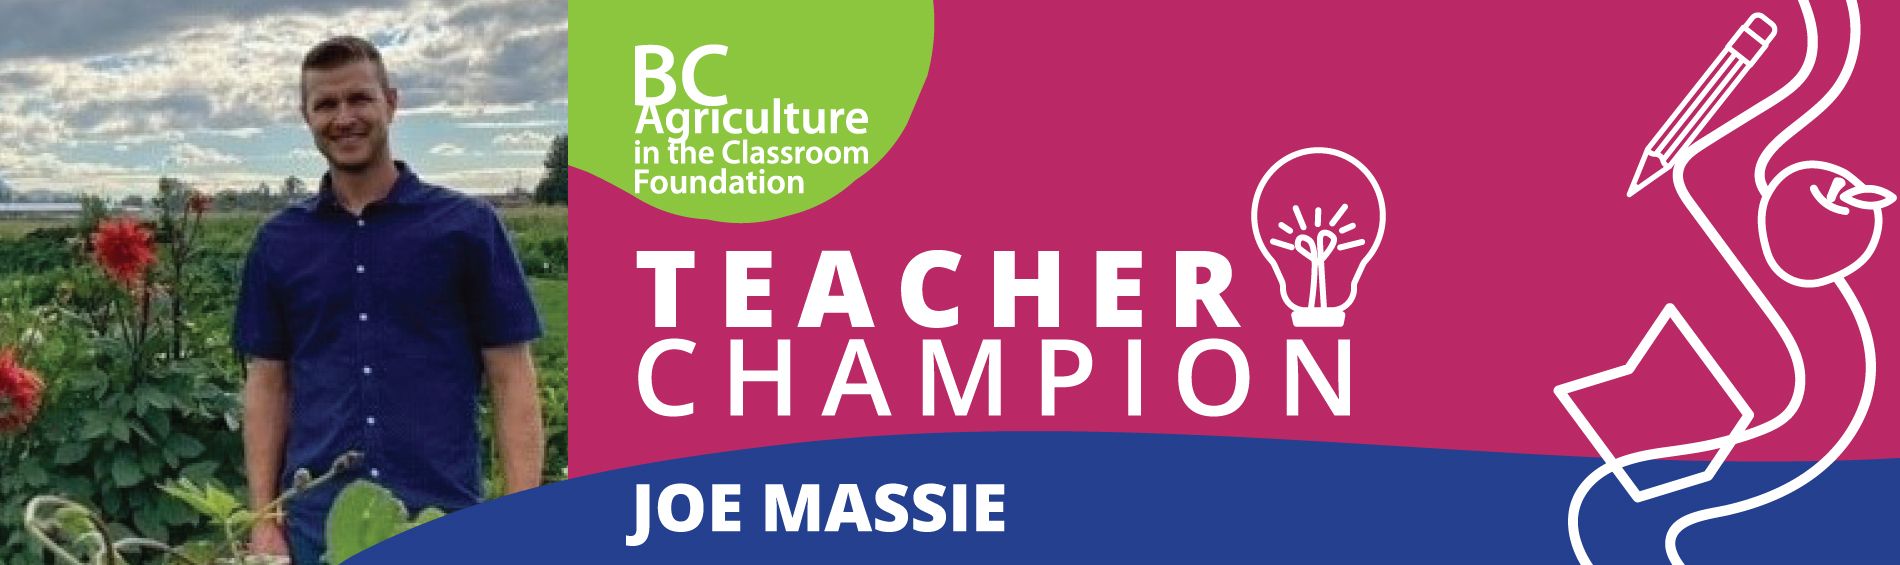 Joe Massie - Teacher Champion